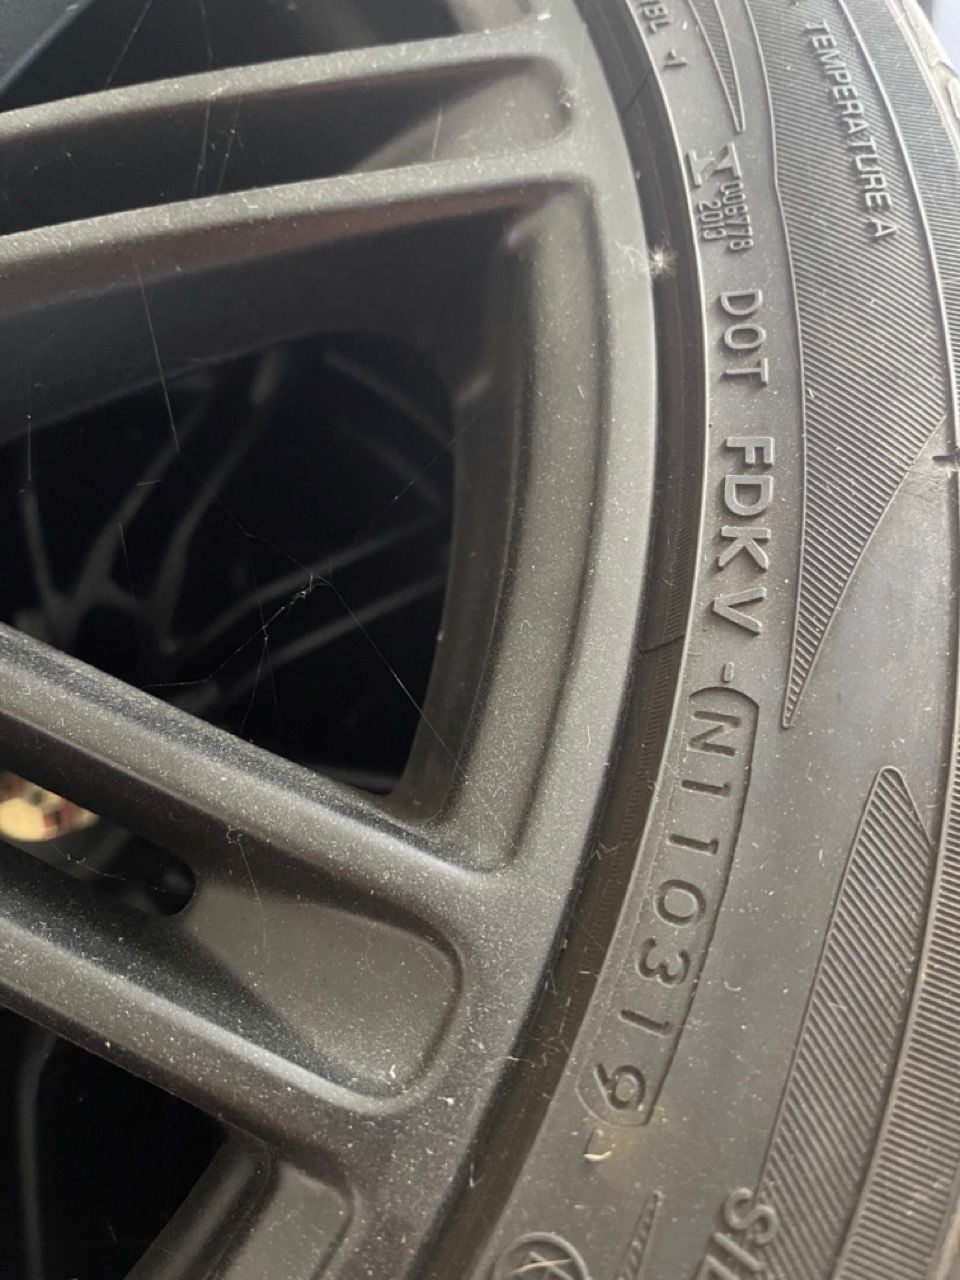 Wheels and Tires/Axles - 21” Sport Edition OEM wheels w/ OEM TPMS + Yokohama Advan Sport CTT Takeoffs - Used - 2011 to 2018 Porsche Cayenne - Calistoga, CA 94515, United States